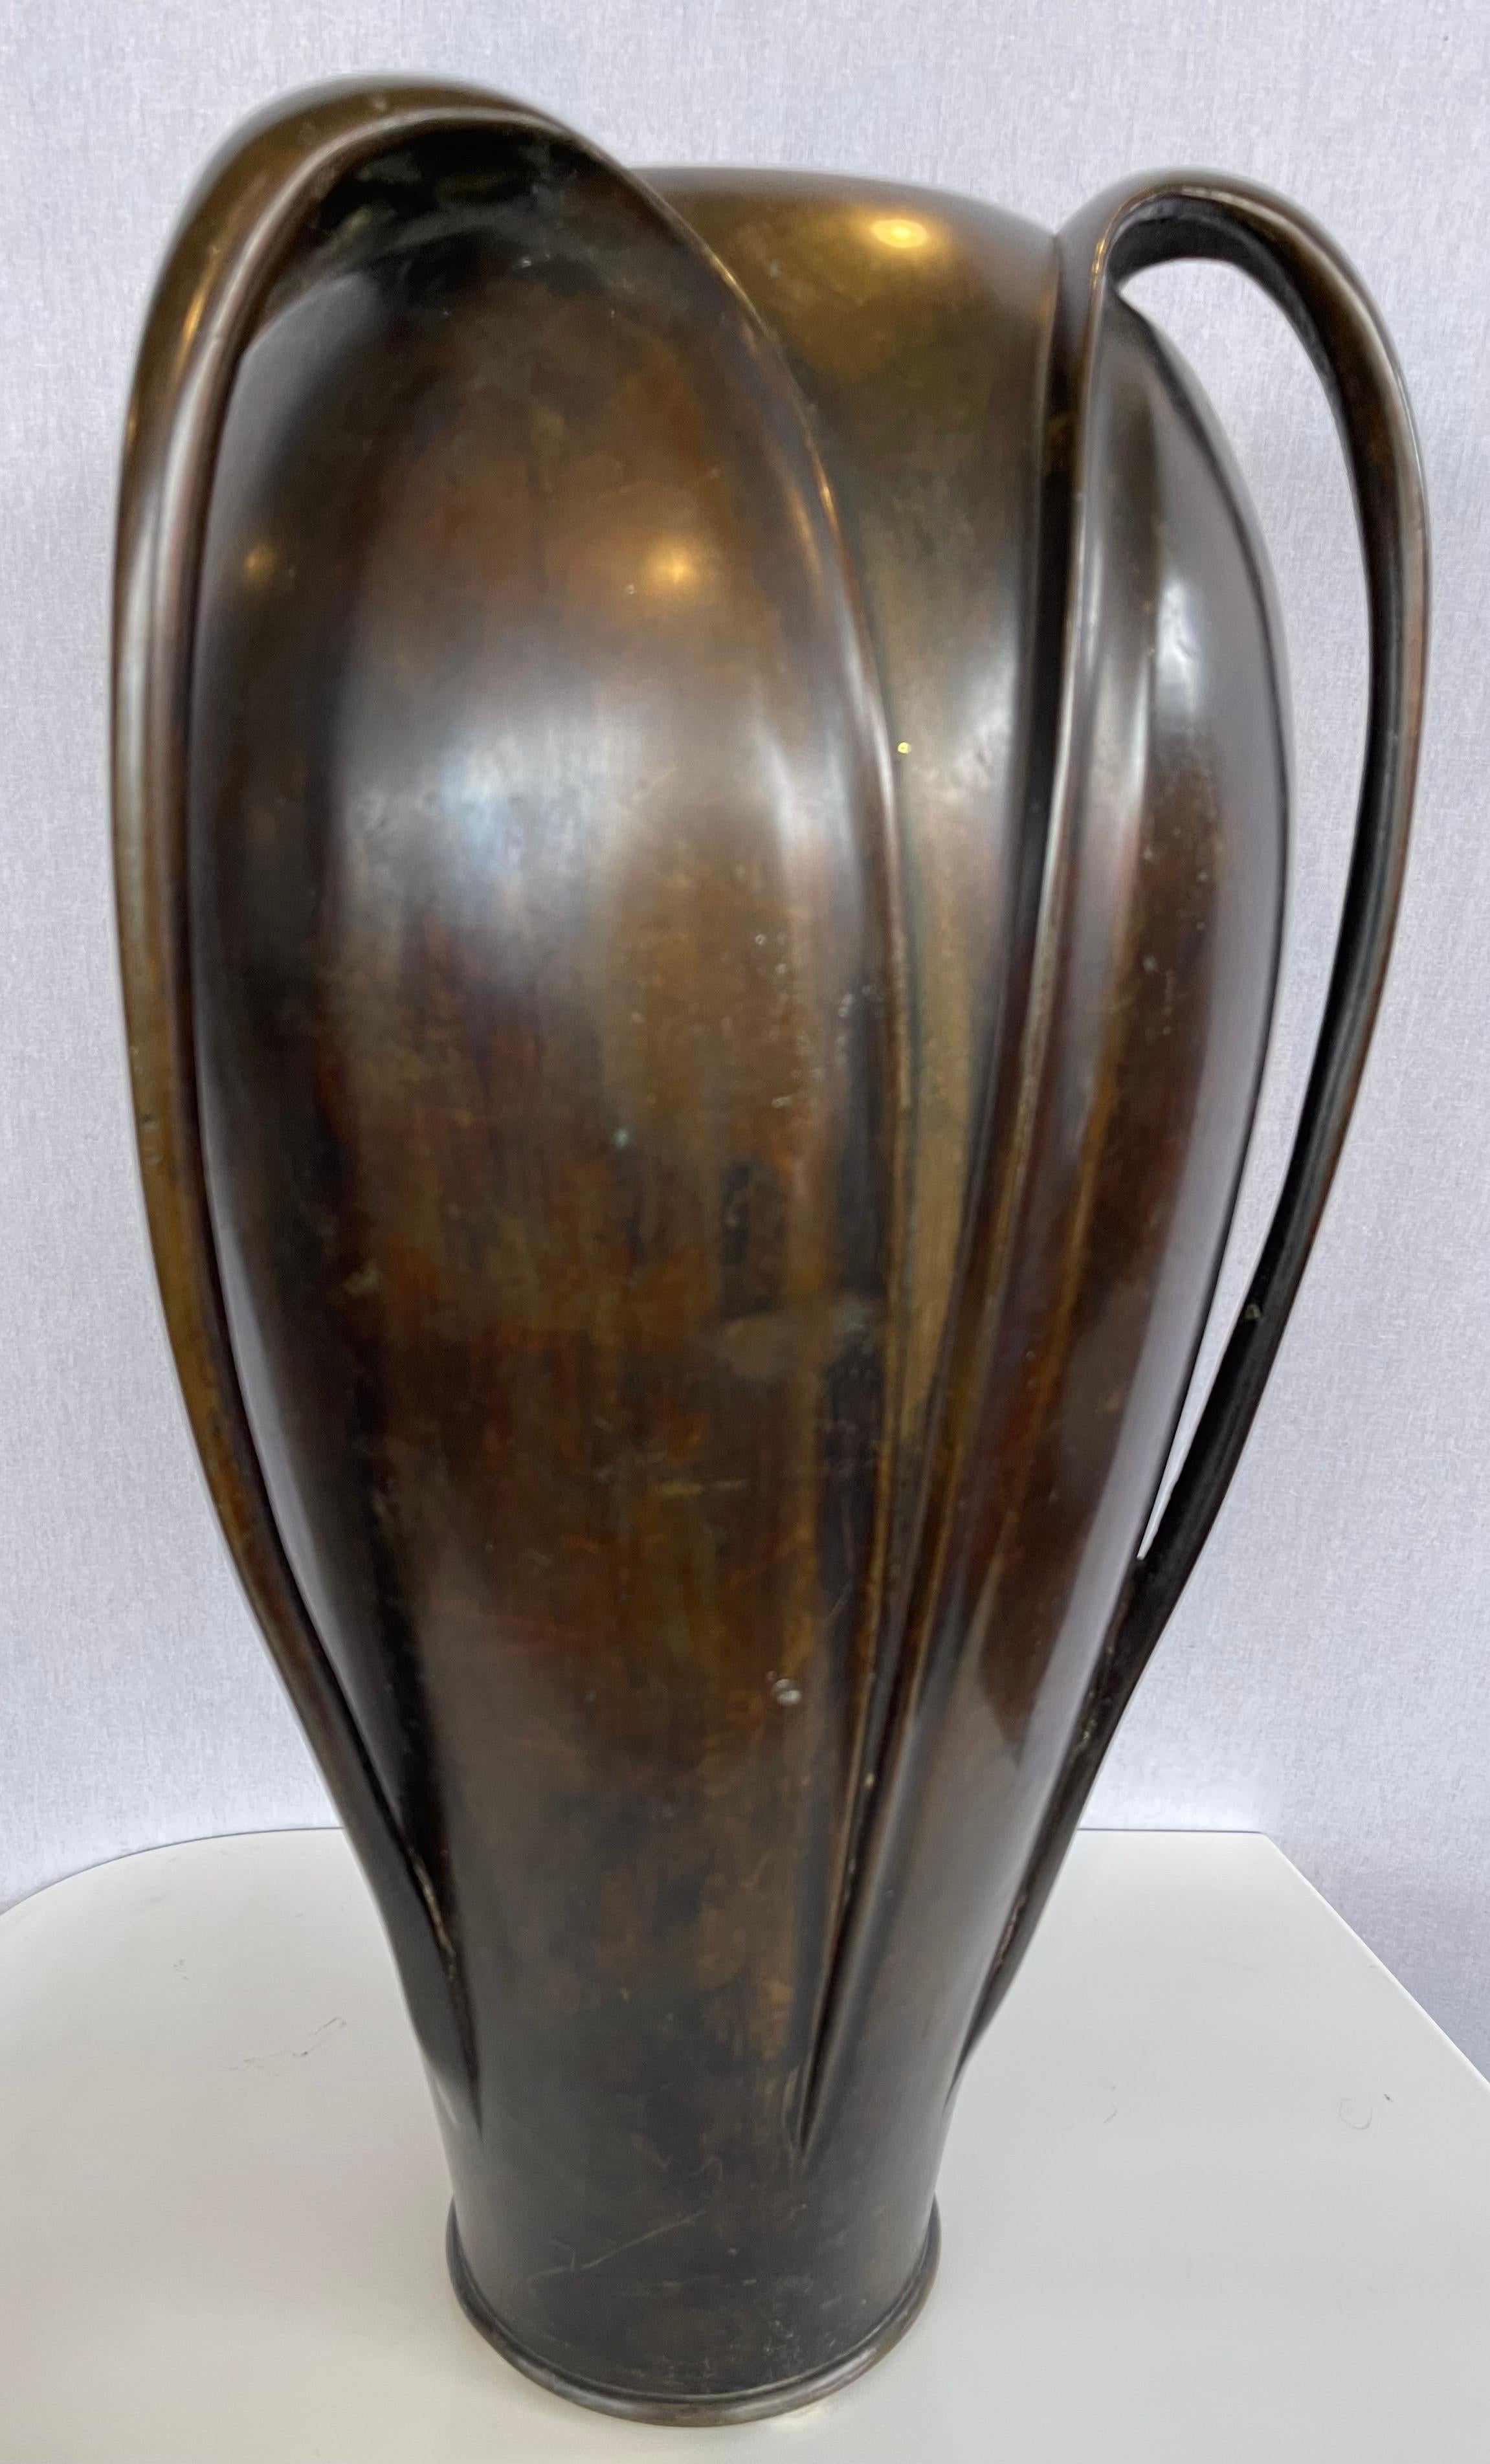 20th Century Antique Japanese Art Nouveau Patinated Bronze Tall Vase Vessel Tri-Handled